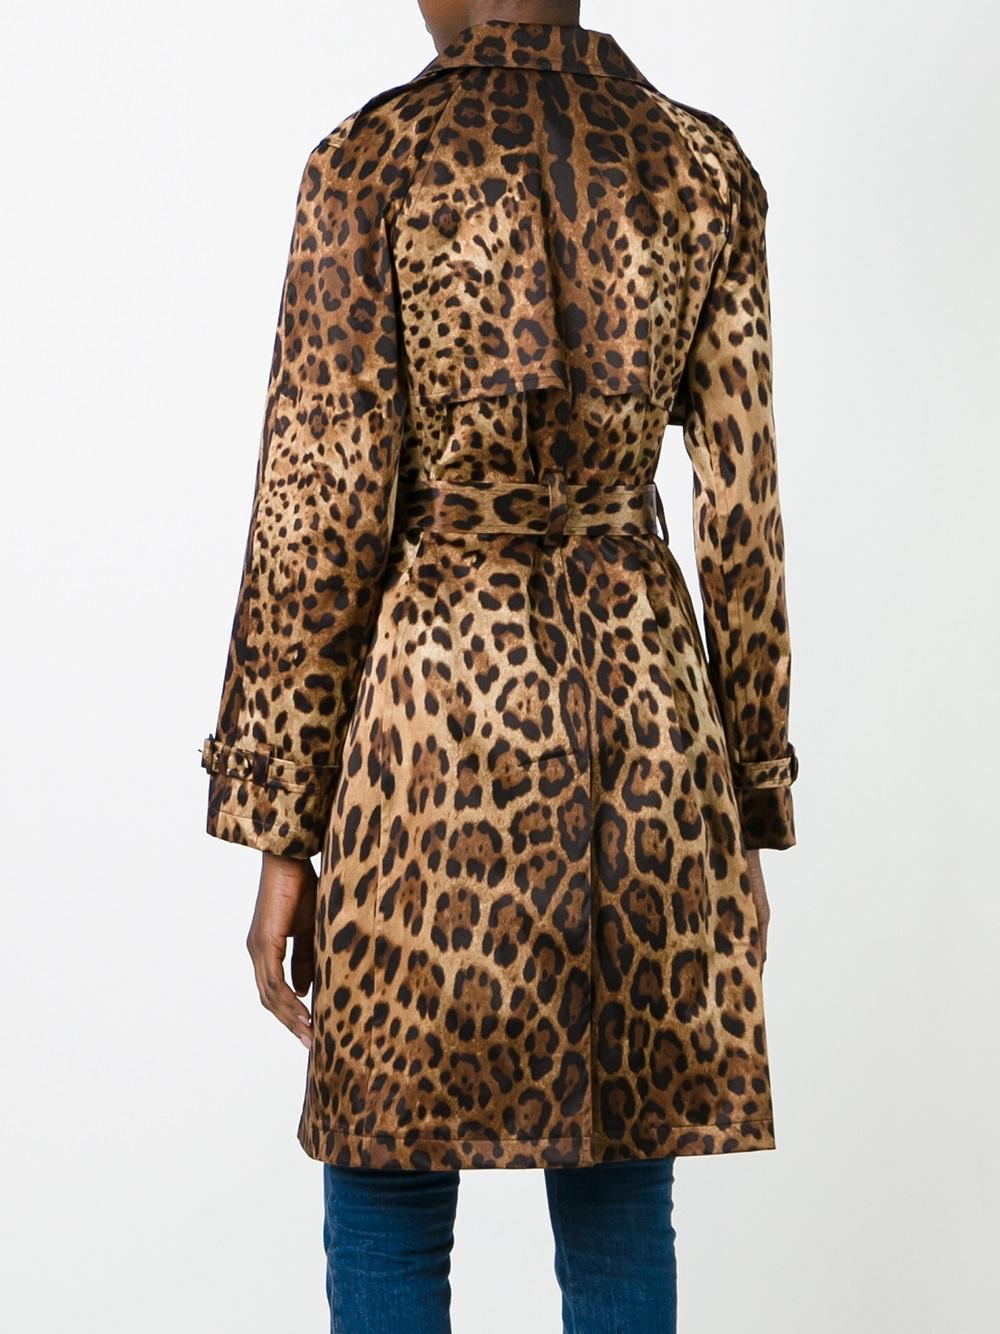 Dolce & Gabbana Silk Leopard Print Trench Coat in Brown - Lyst